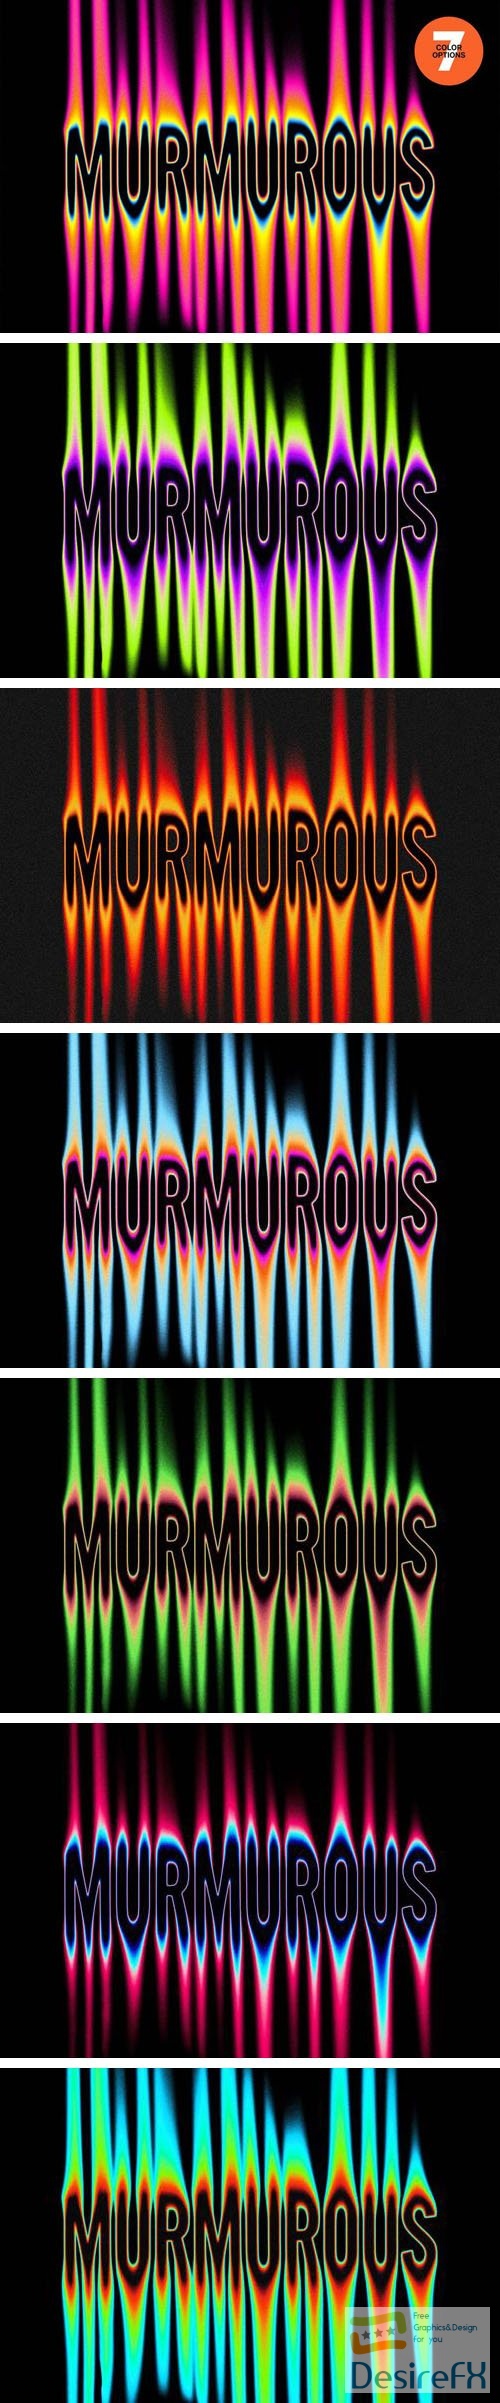 Murmurous - Acid Melting Text Effect for Photoshop